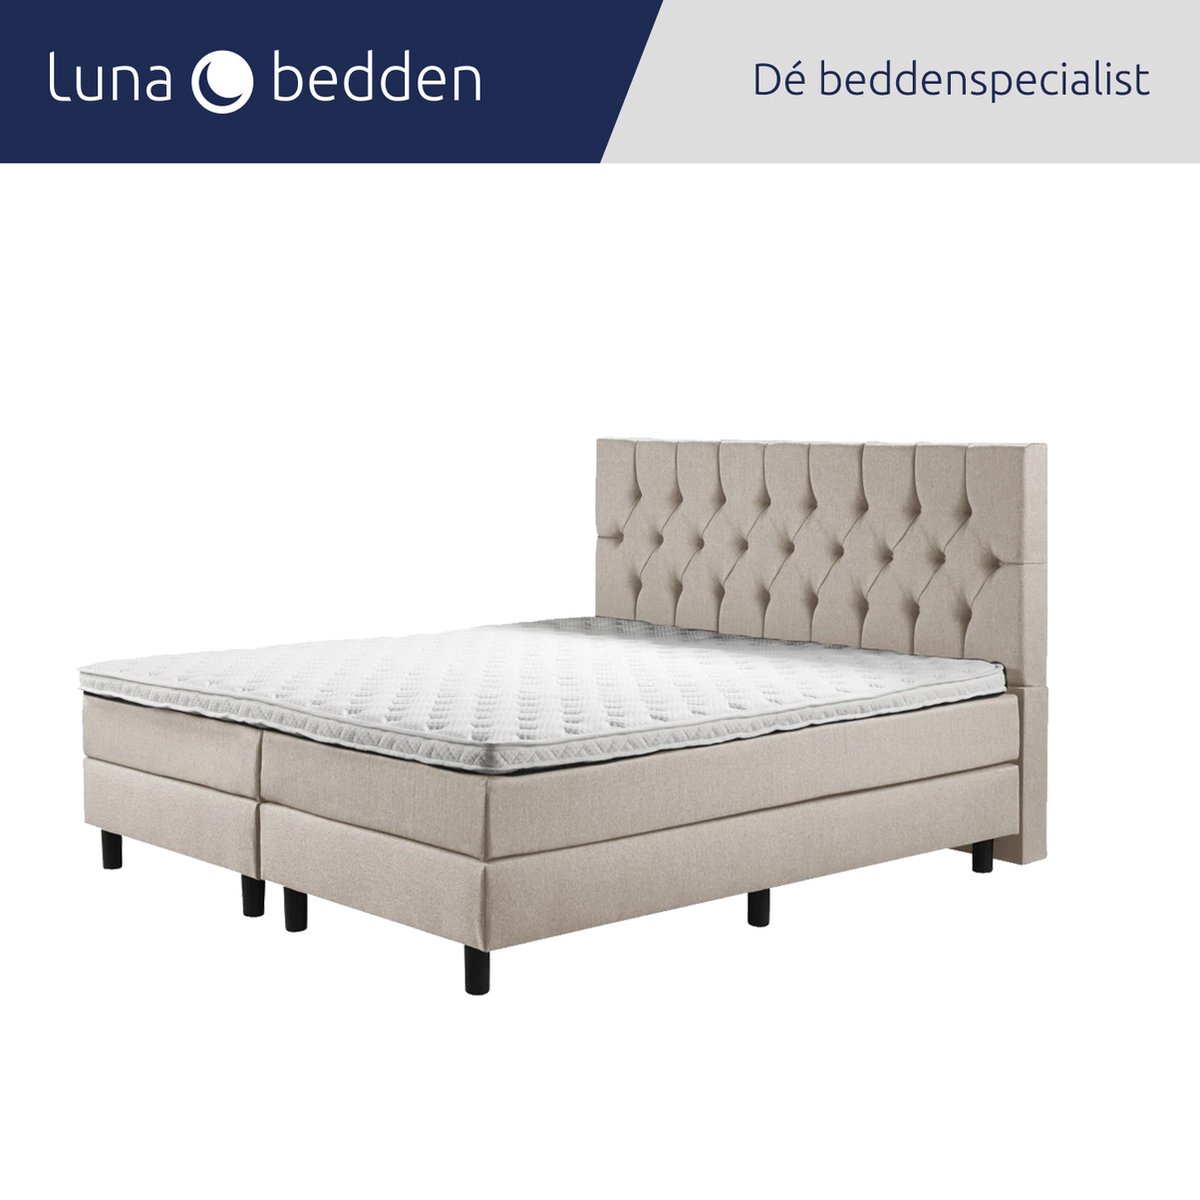 Wegenbouwproces Paradox Beschaven Luna Bedden - Boxspring Luna - 160x200 Compleet Beige Gecapitonneerd Bed |  bol.com